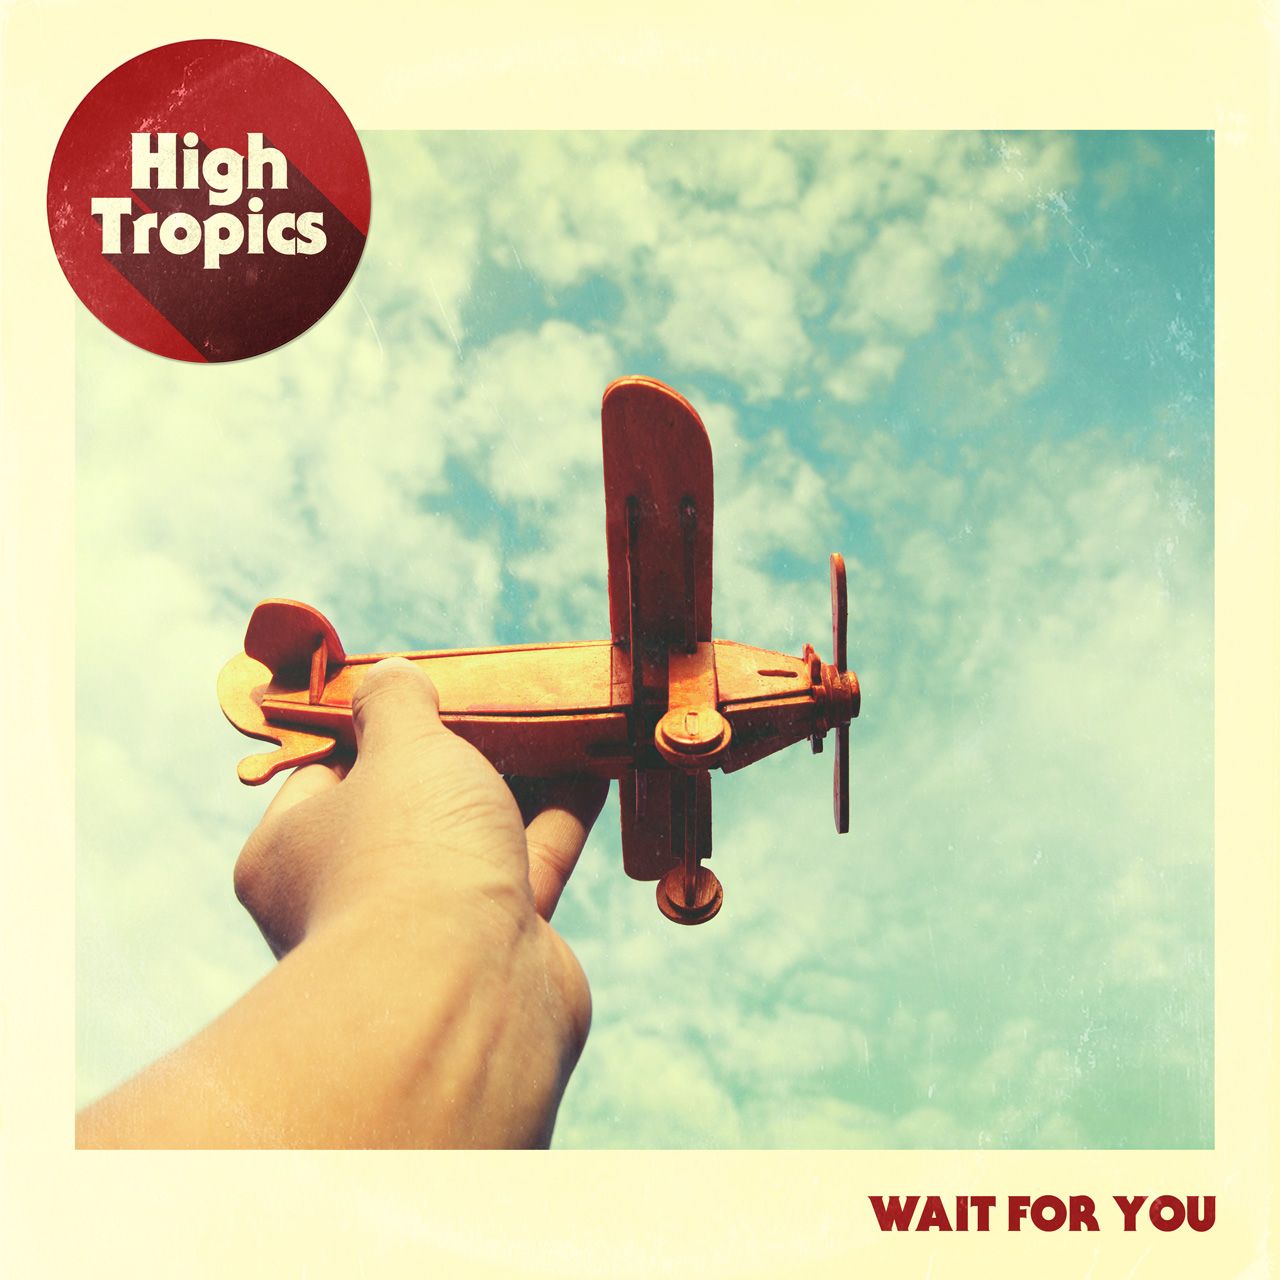 High Tropics – “Wait For You”